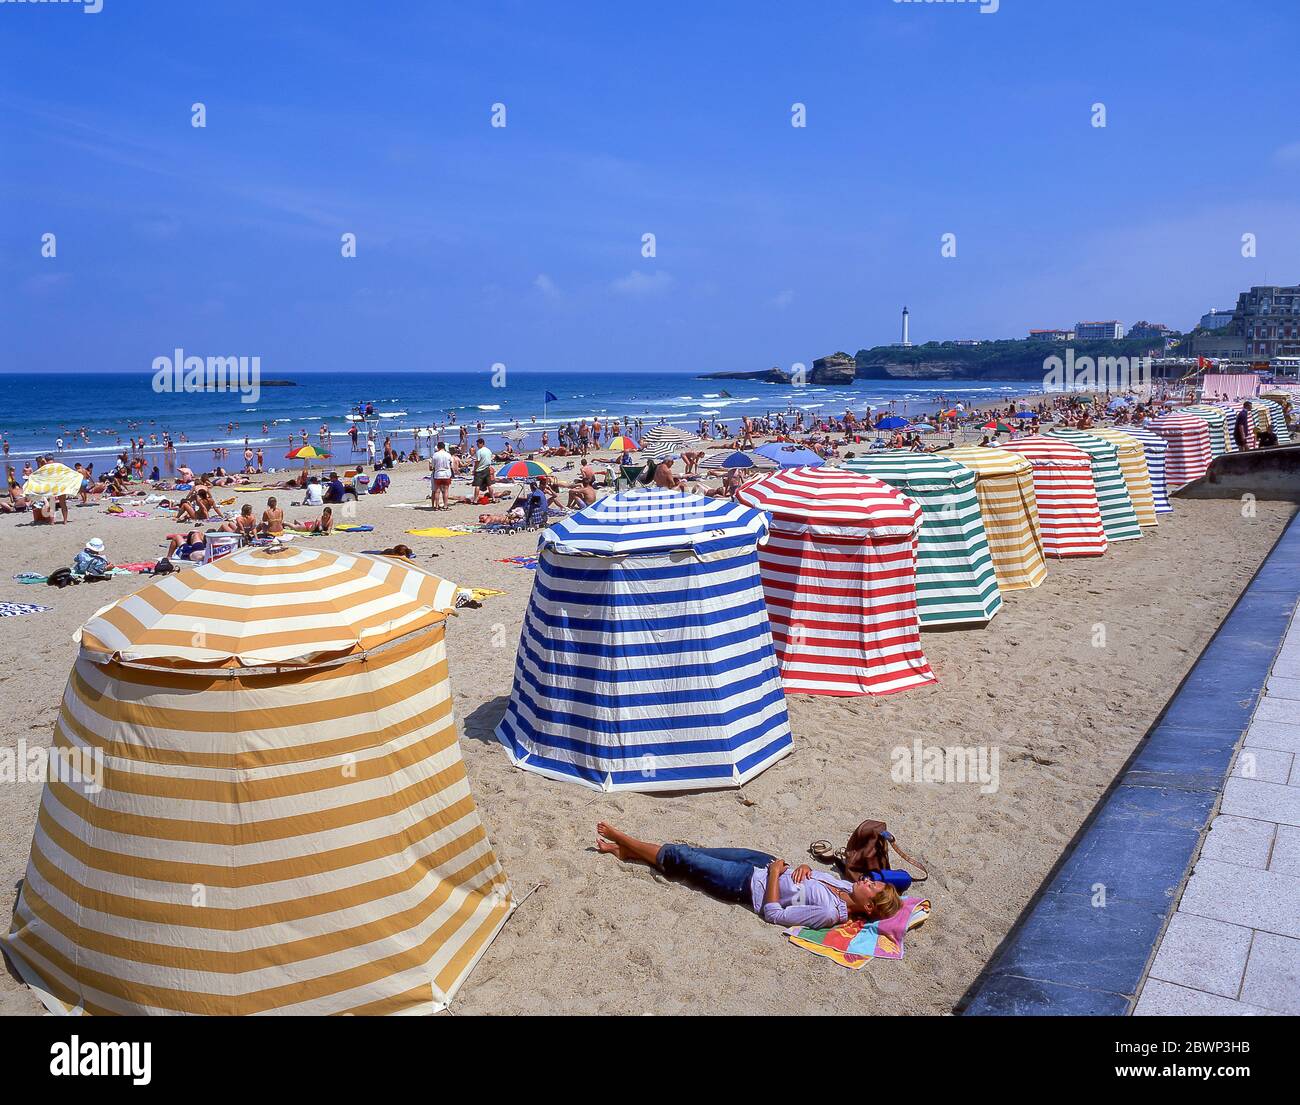 Vintage-Zelte zum Umziehen am Strand auf Plage Miramar, Biarritz (Miarritze), Pyrénées-Atlantiques, Nouvelle-Aquitaine, Frankreich Stockfoto